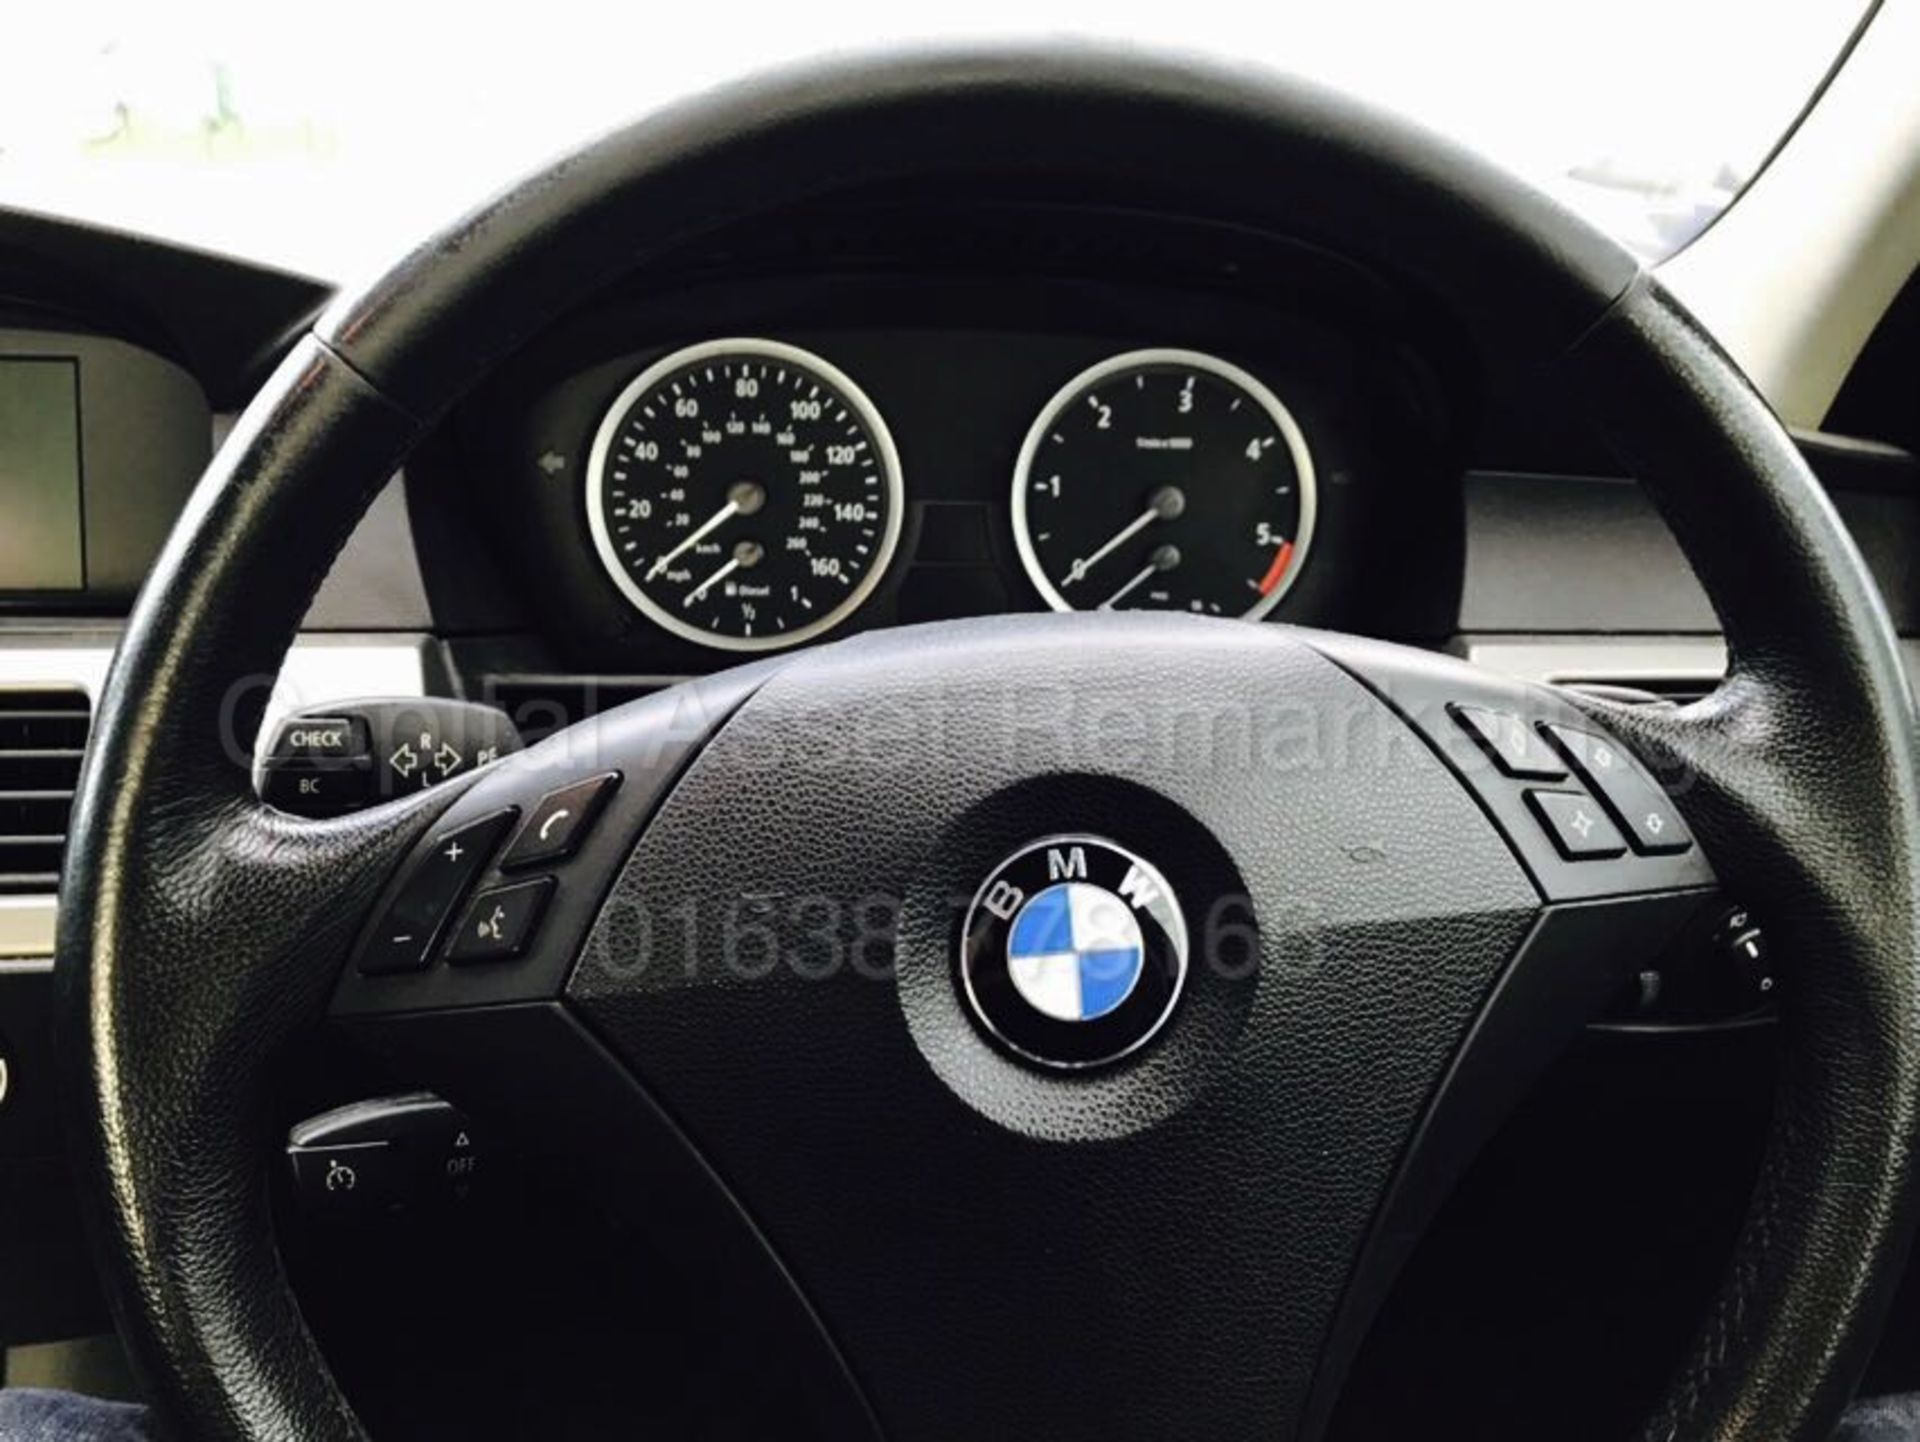 BMW 520D 'SE - SALOON' (2007 MODEL) '2.0 DIESEL - 163 BHP - 6 SPEED' *50 MPG+* (NO VAT - SAVE 20%) - Image 16 of 17